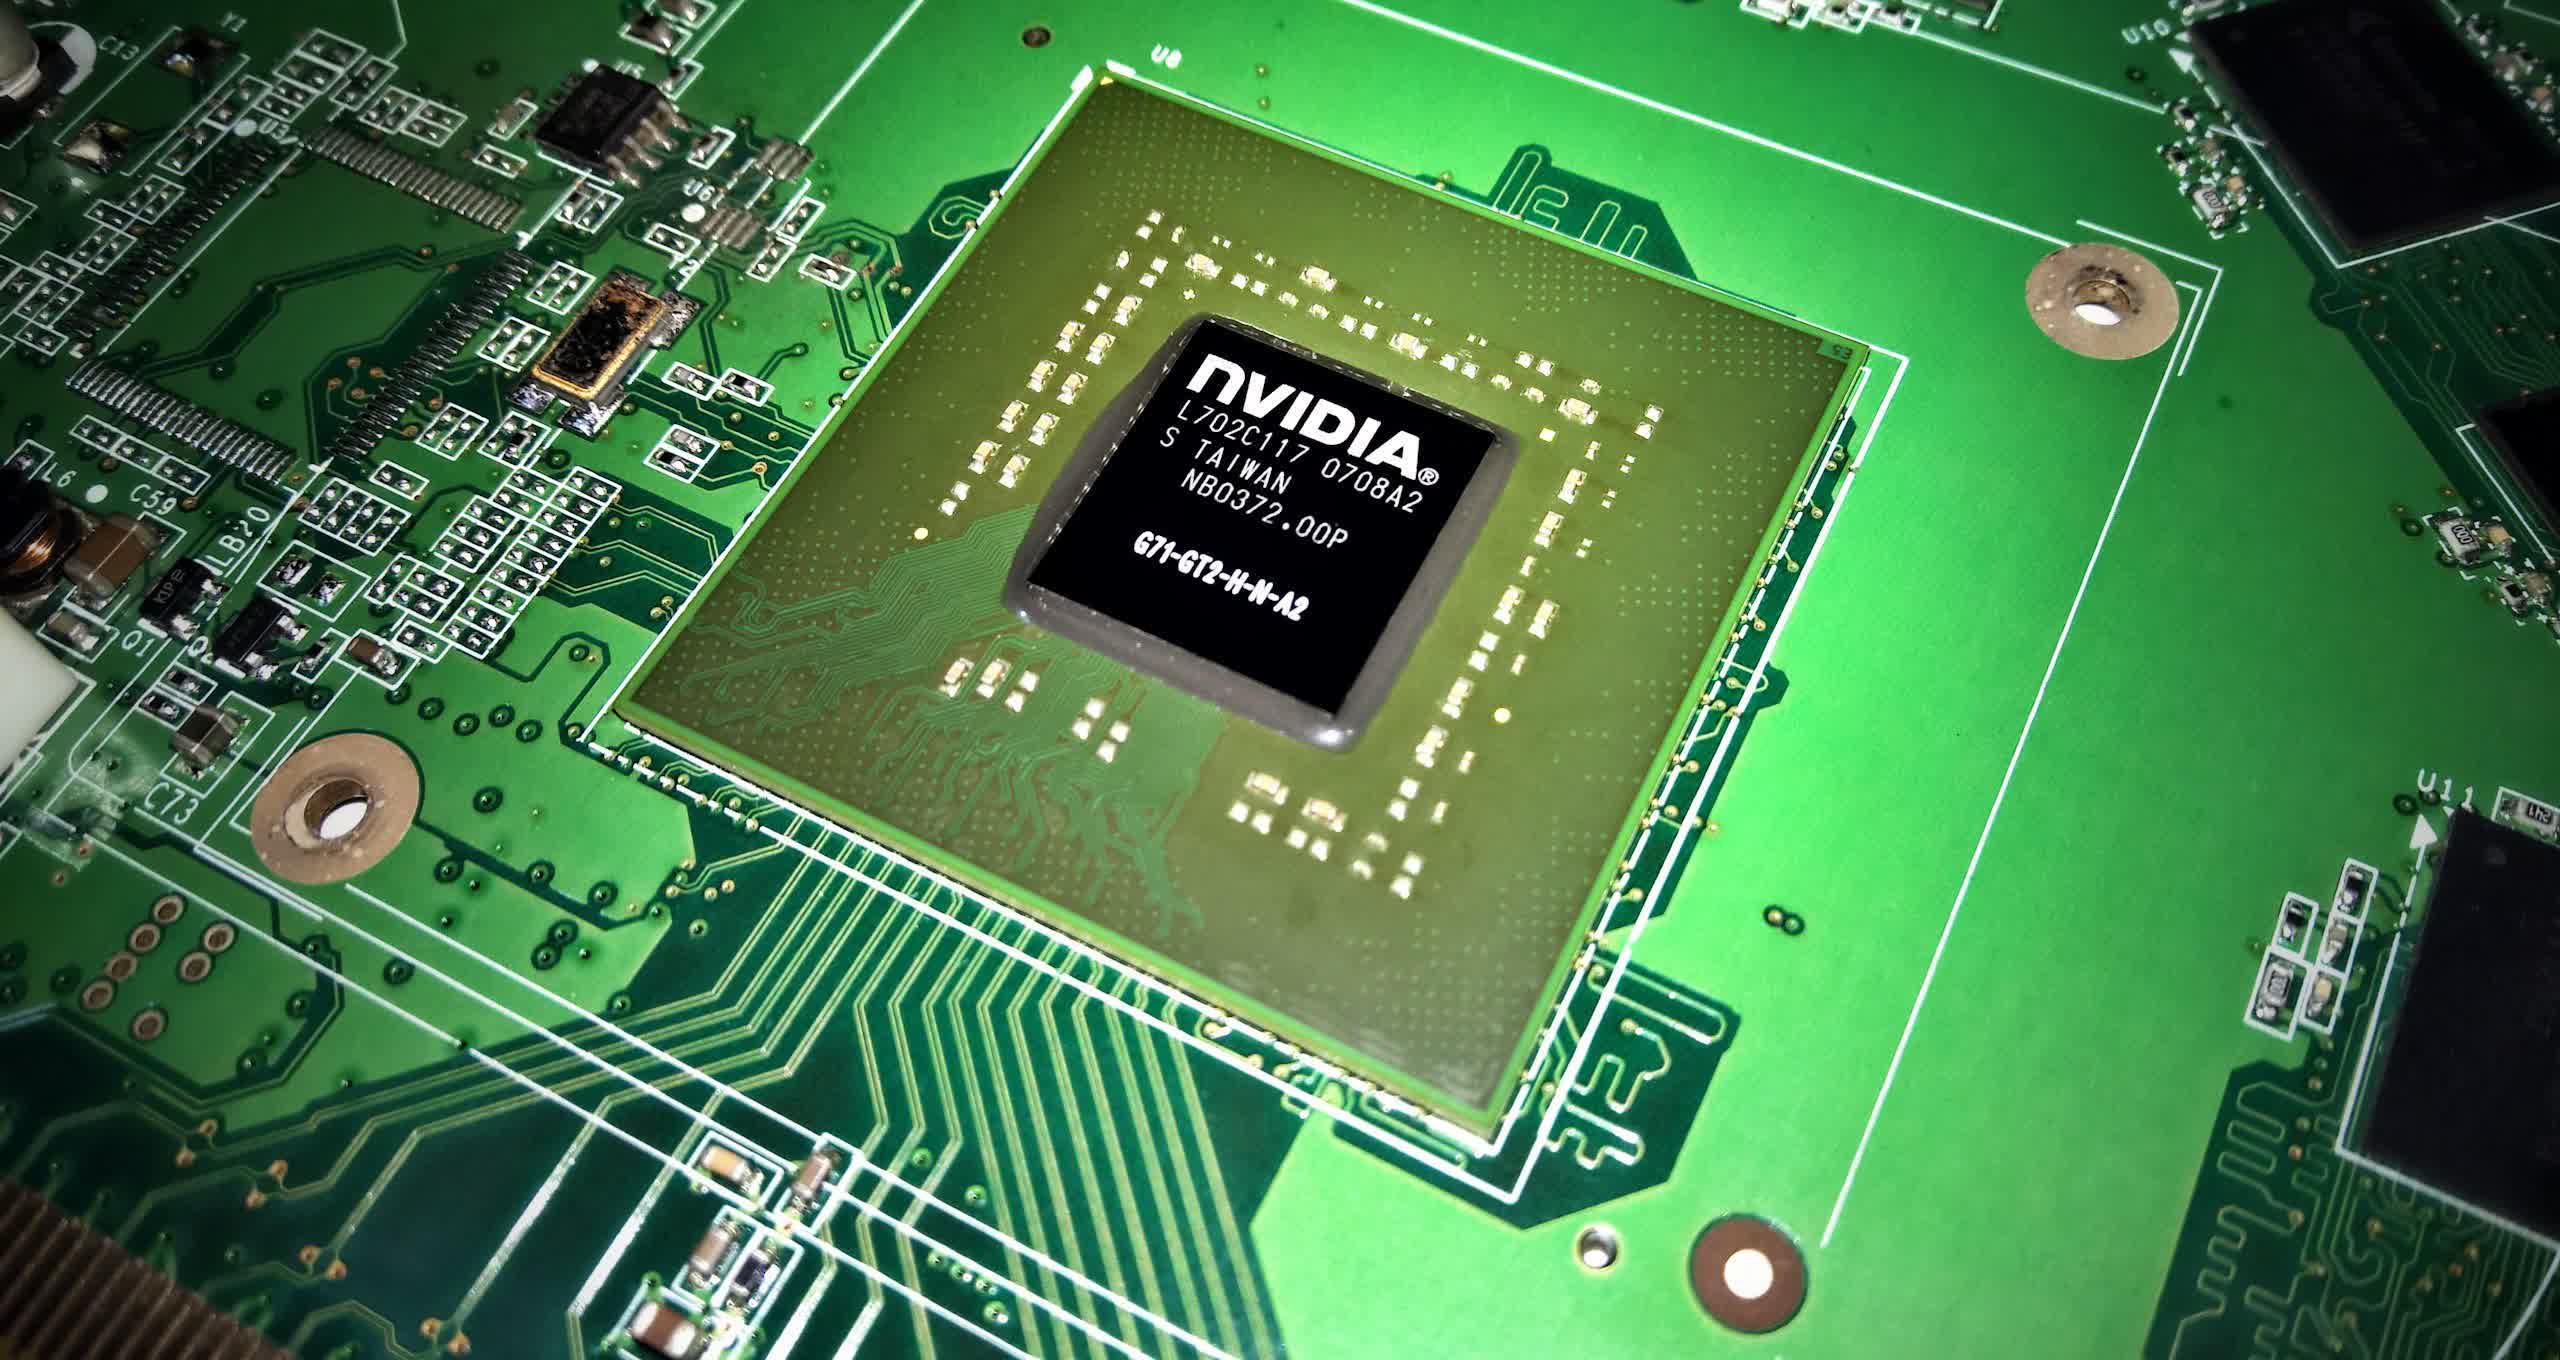 This supposed Nvidia GPU hash rate unlocker was just malware